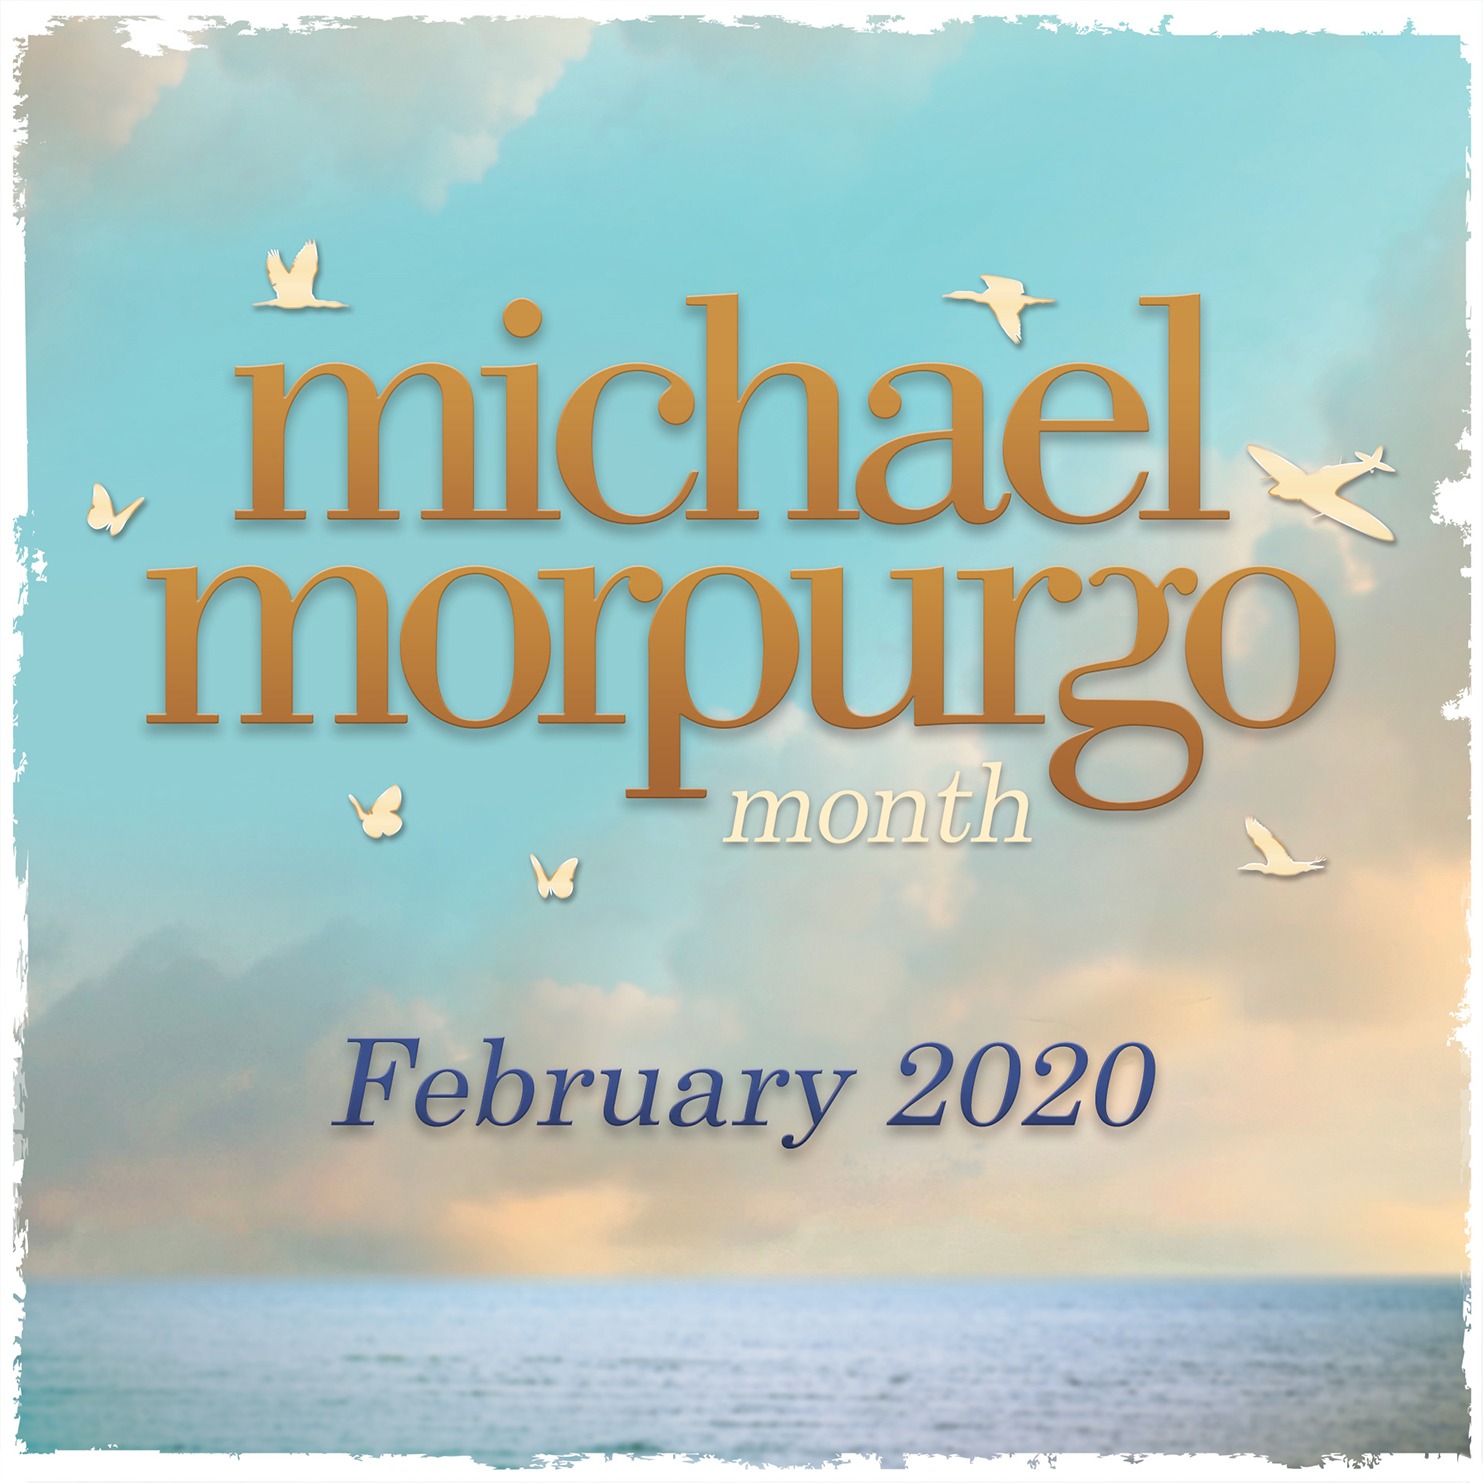 Michael Morpurgo Month 2020